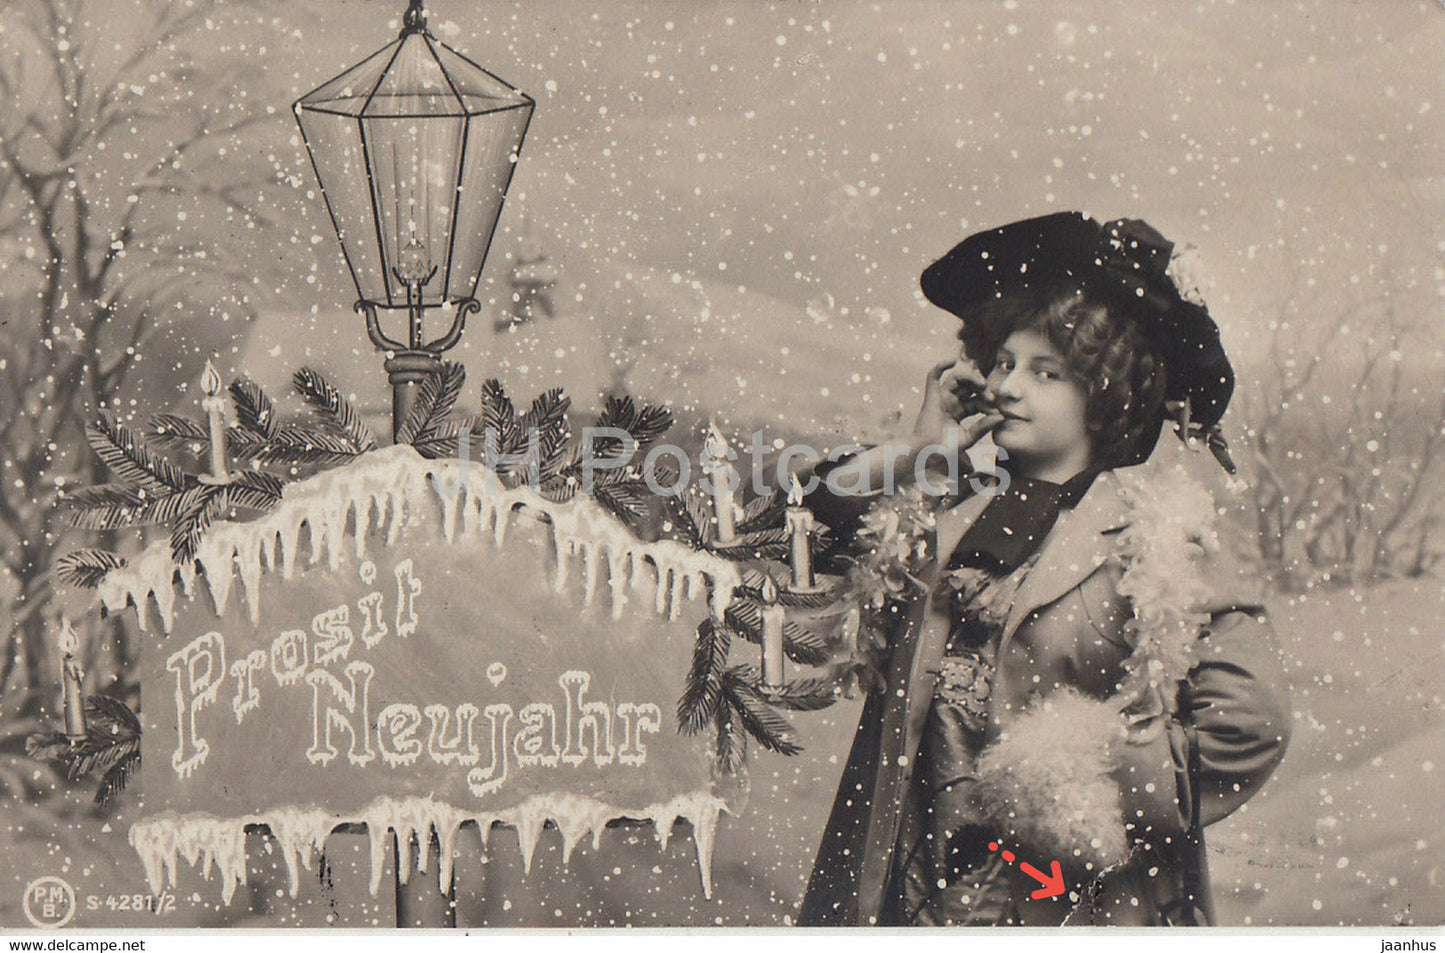 New Year Greeting Card - Prosit Neujahr - woman - P M B 4281/2 - old postcard - Germany - used - JH Postcards